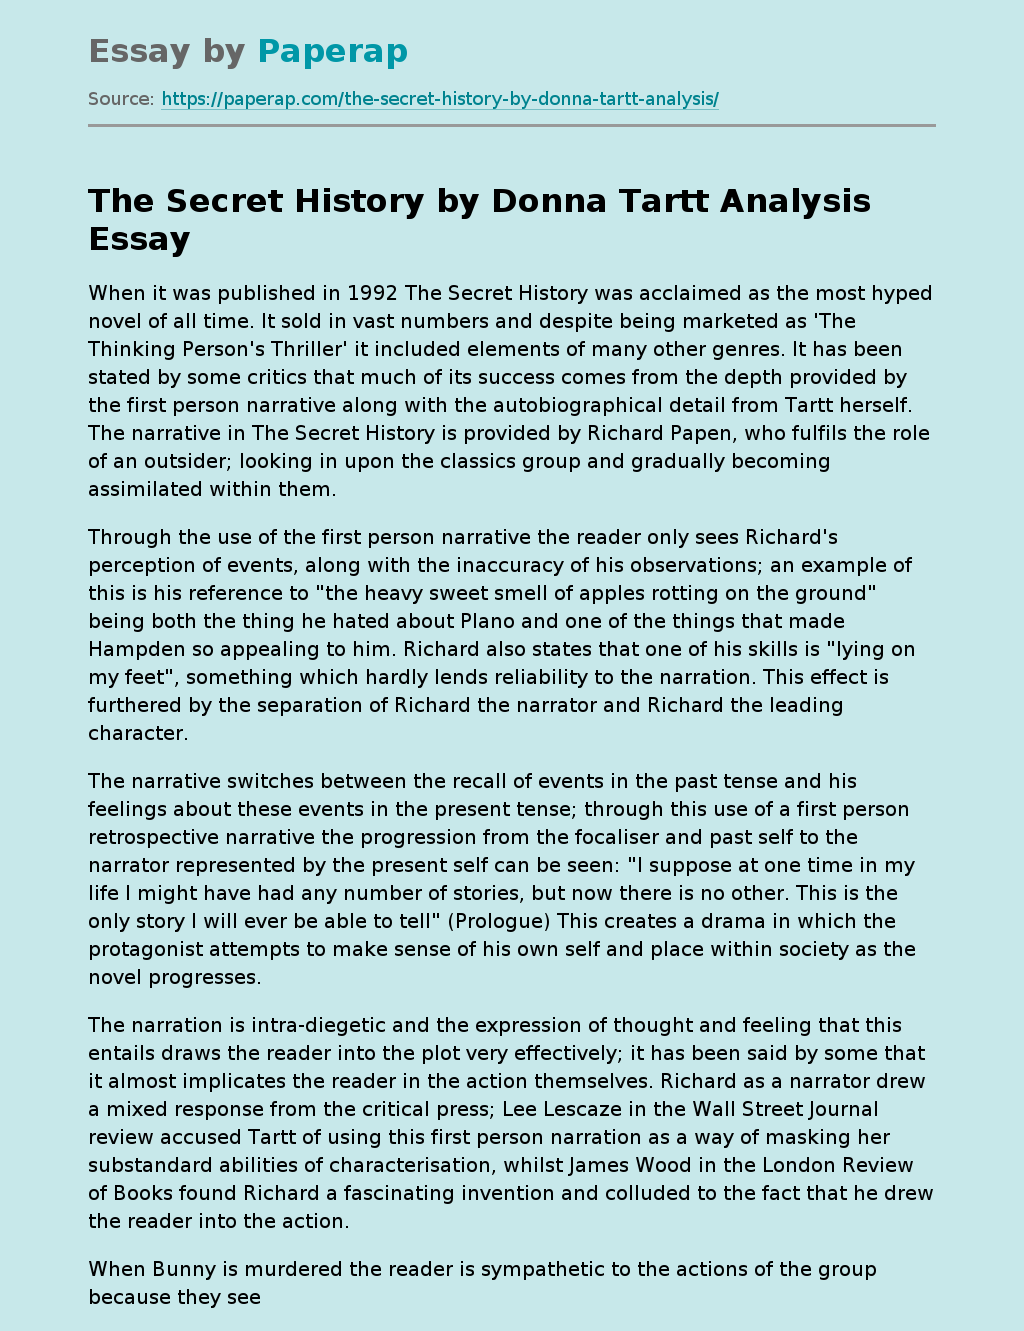 The Secret History by Donna Tartt Analysis